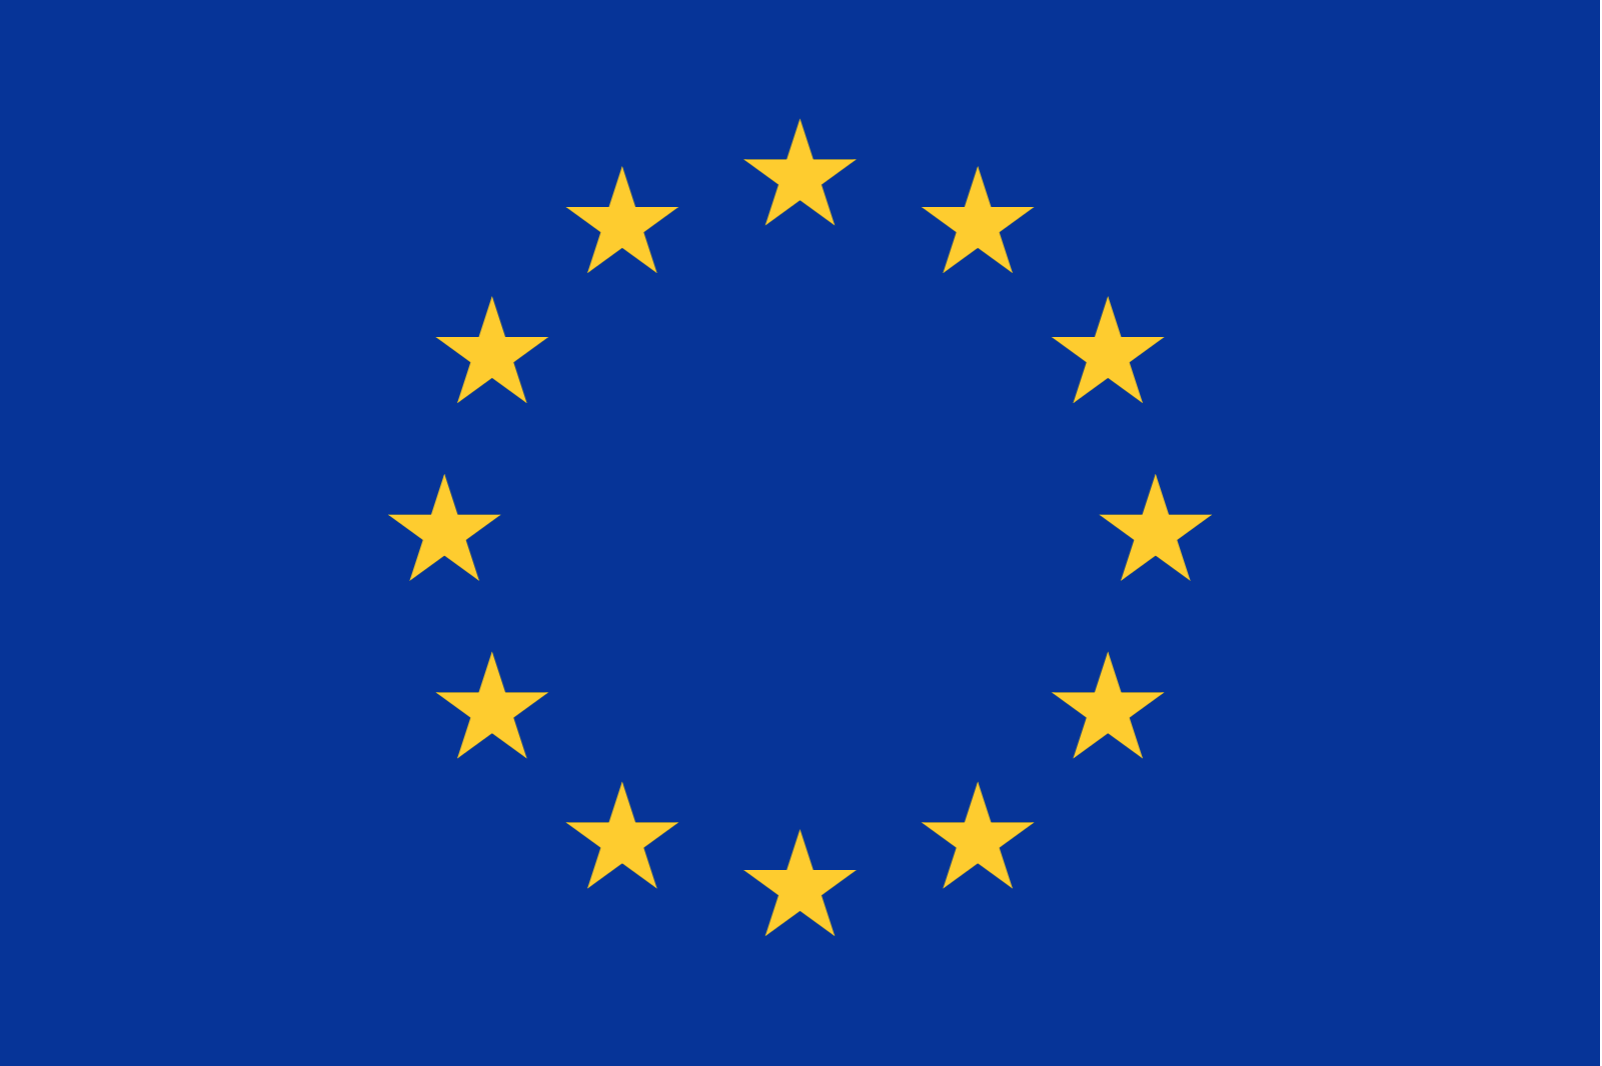 Flag of the European Union. Source: Wikimedia Commons, Public domain.